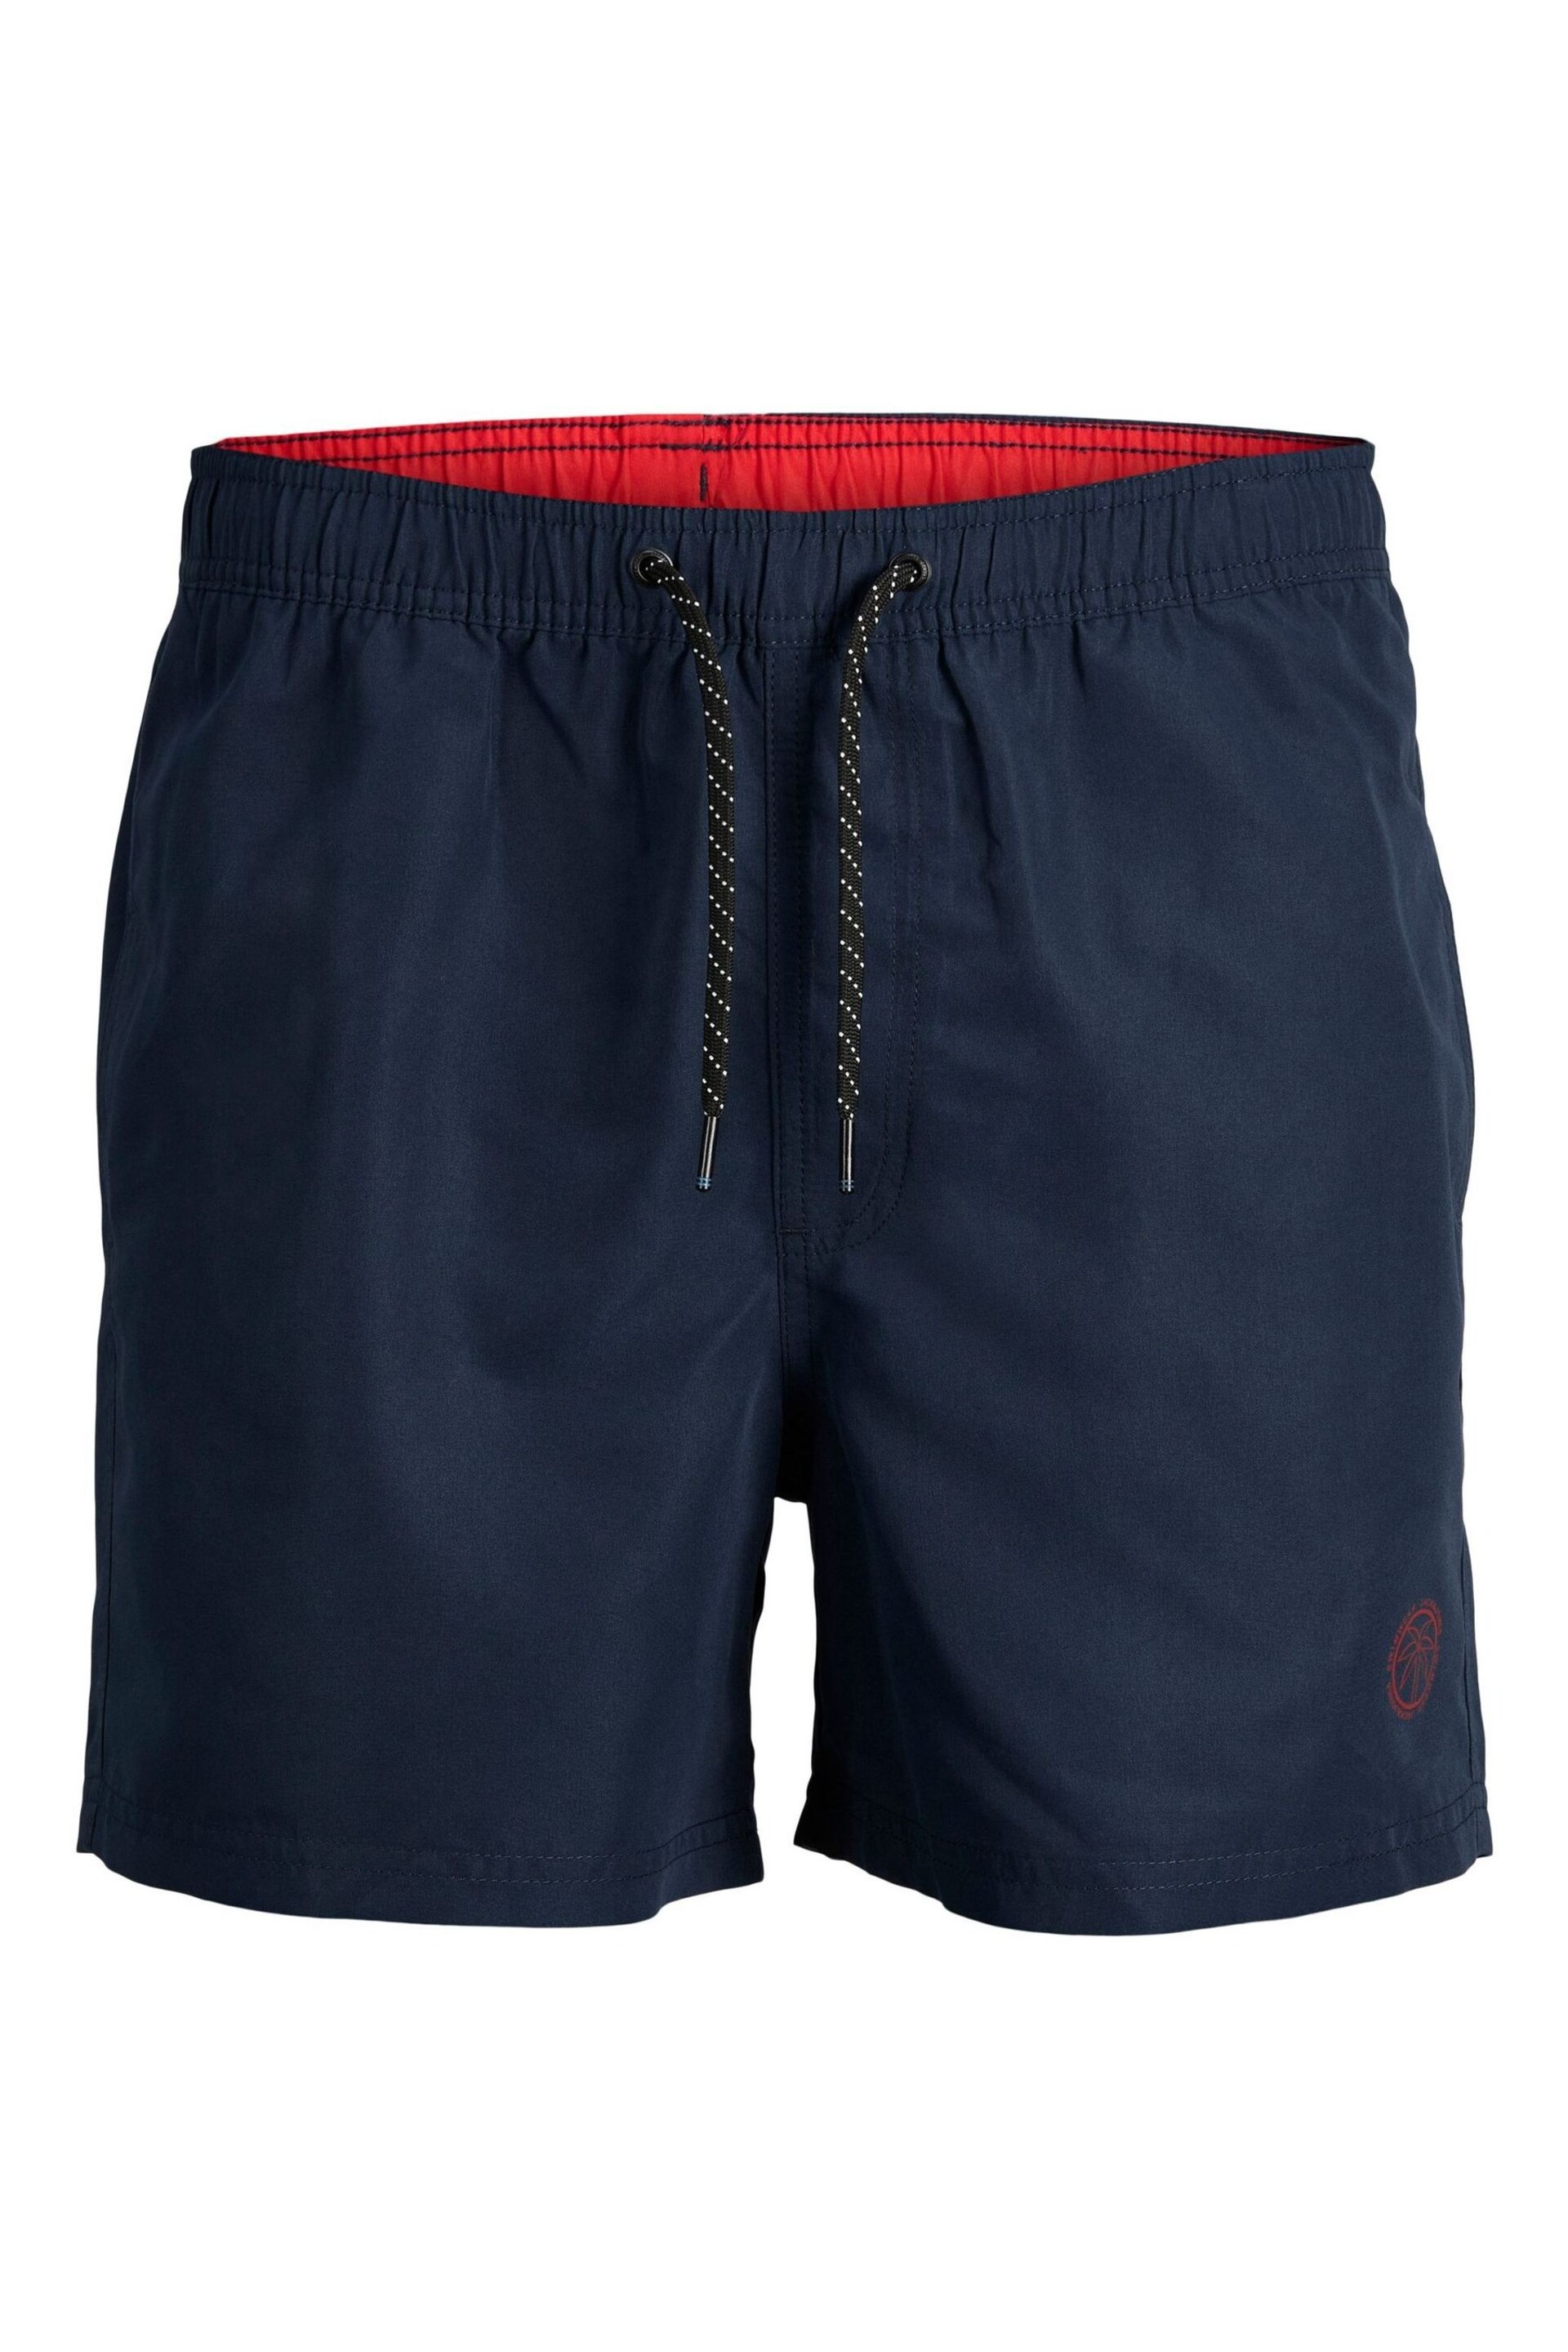 JACK & JONES Blue Swim Shorts With Contrast Lining - Image 6 of 7